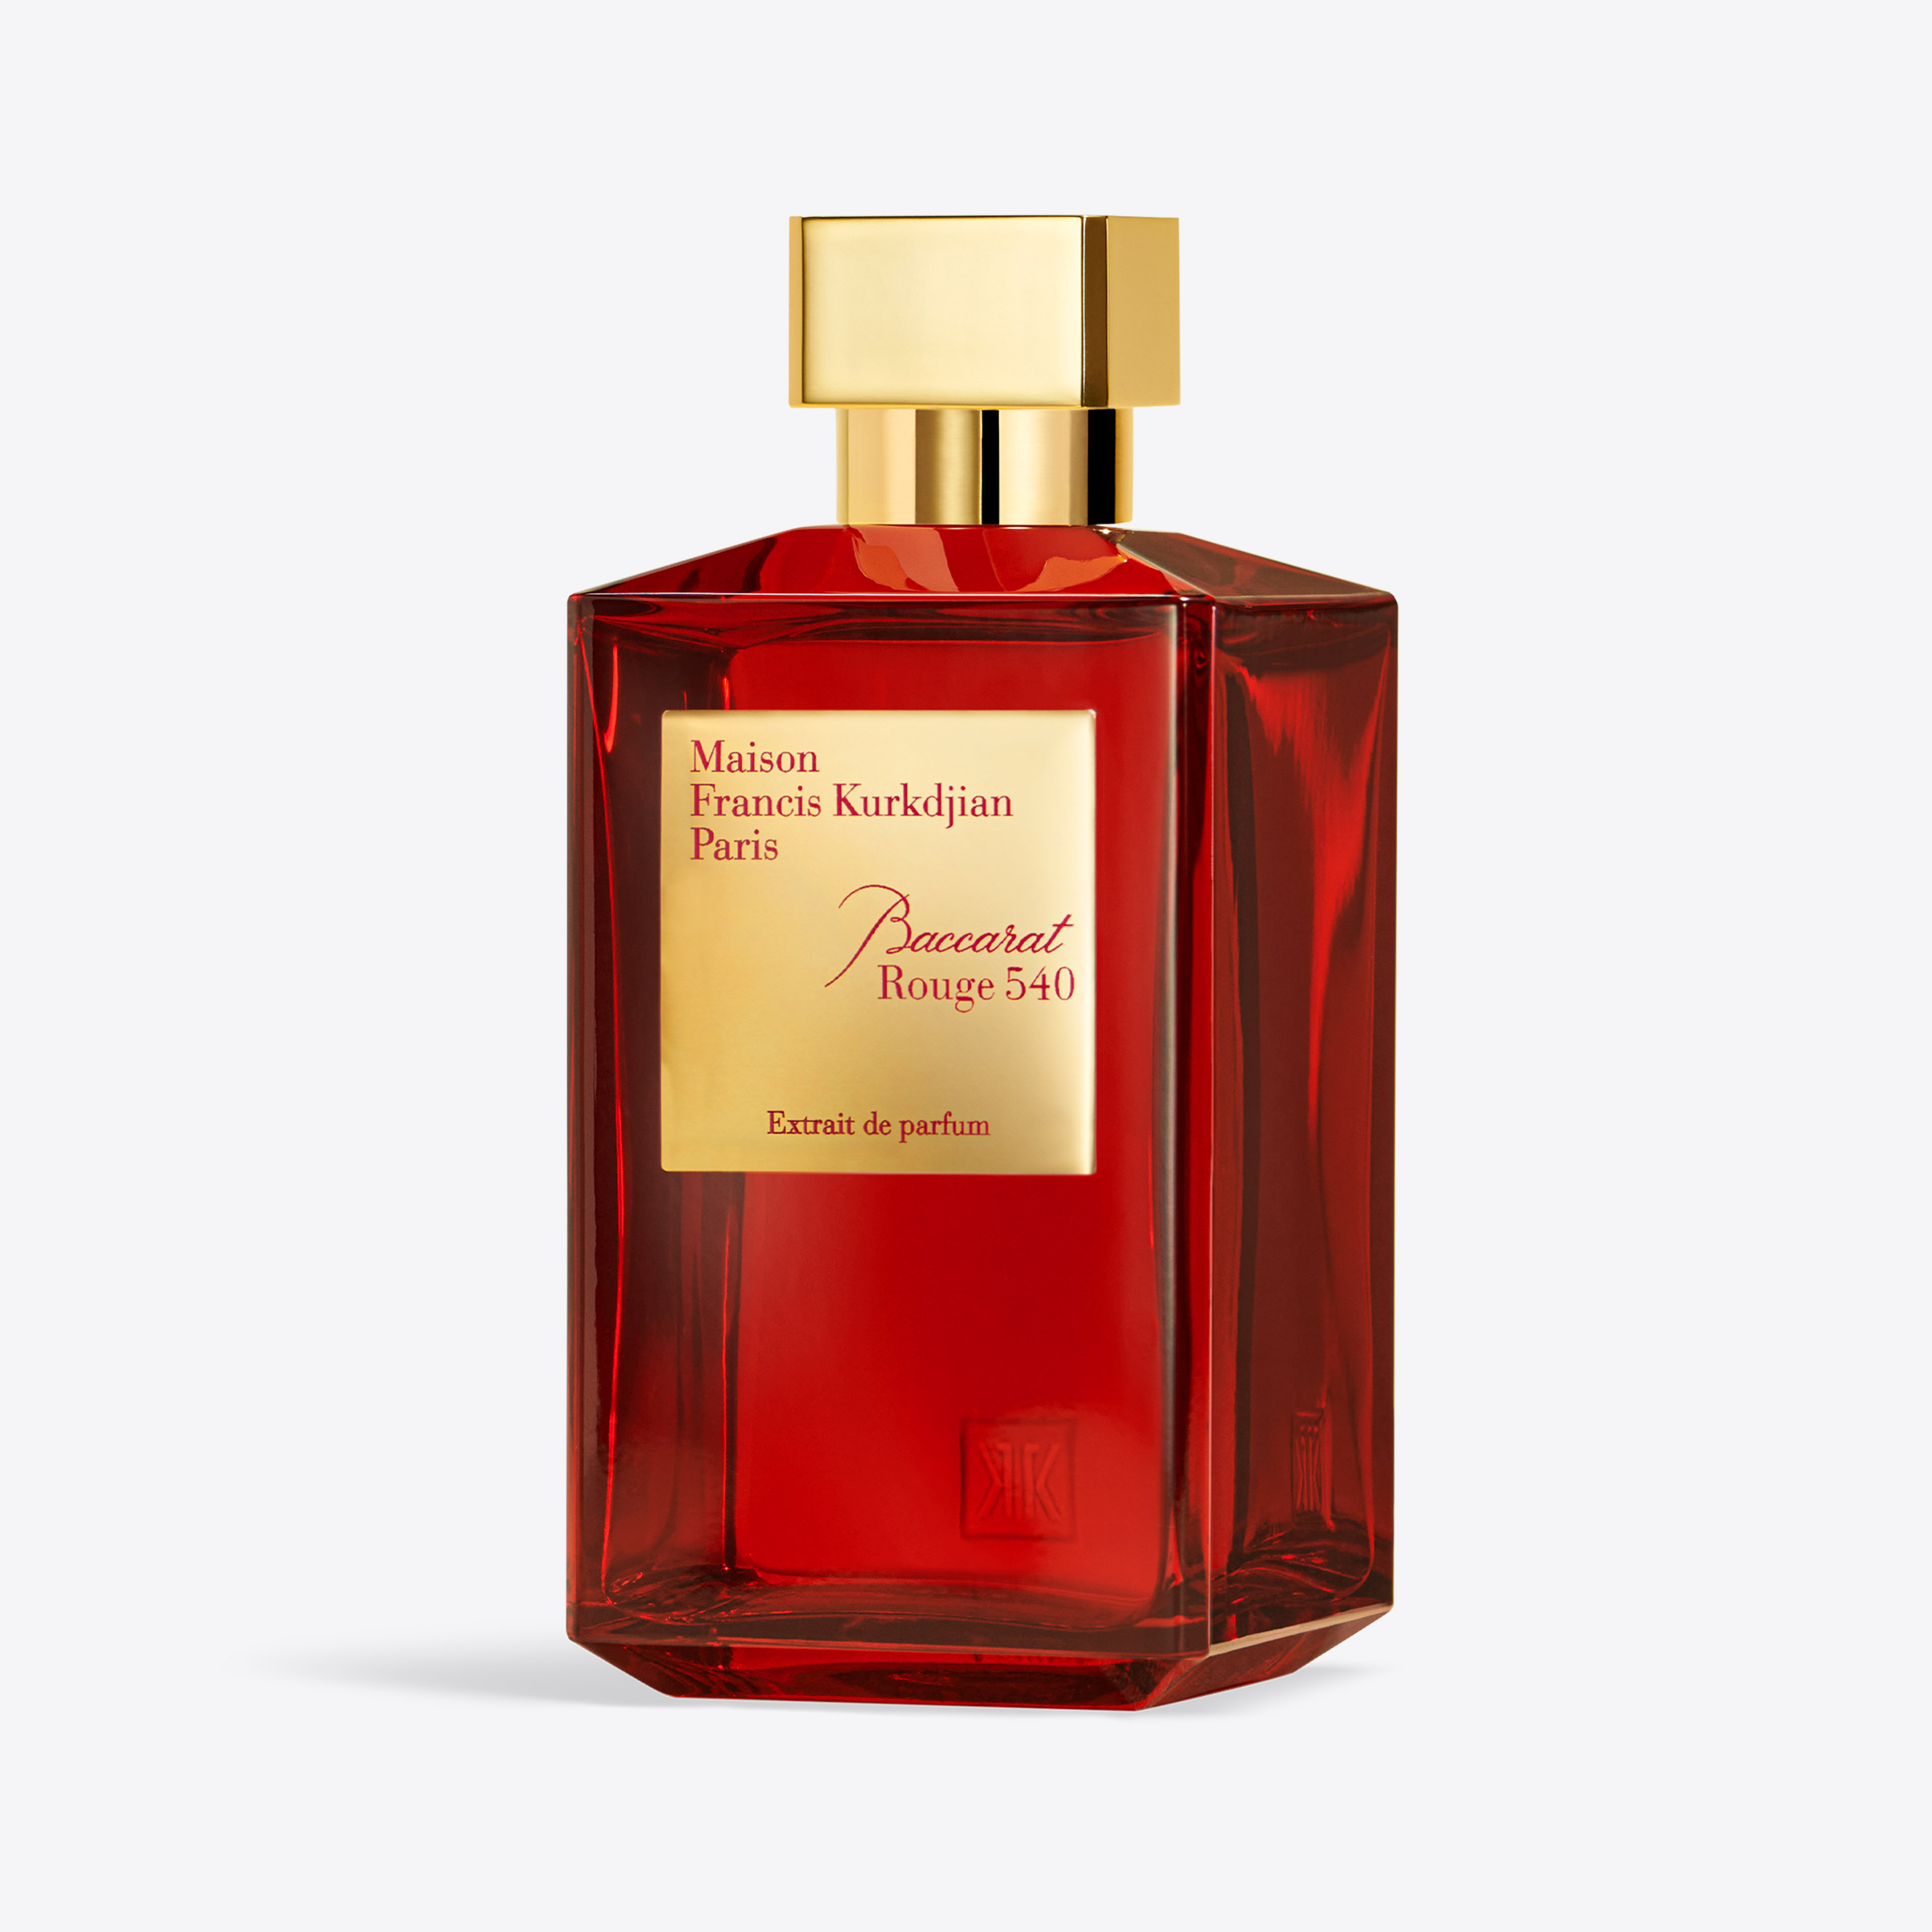 Perfume bottle Vase - Prestige Gifts